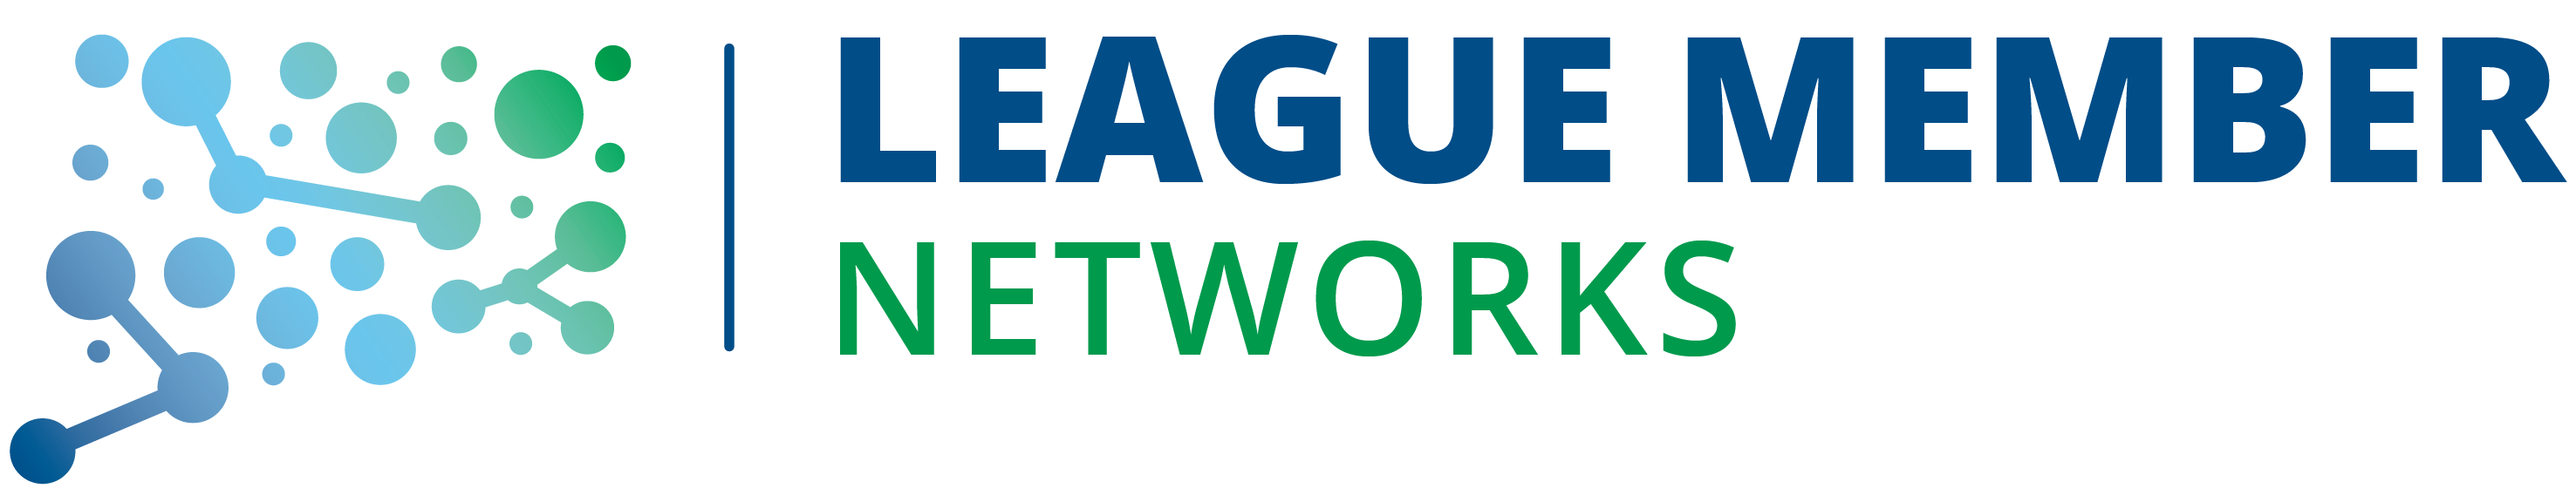 League Member Networks